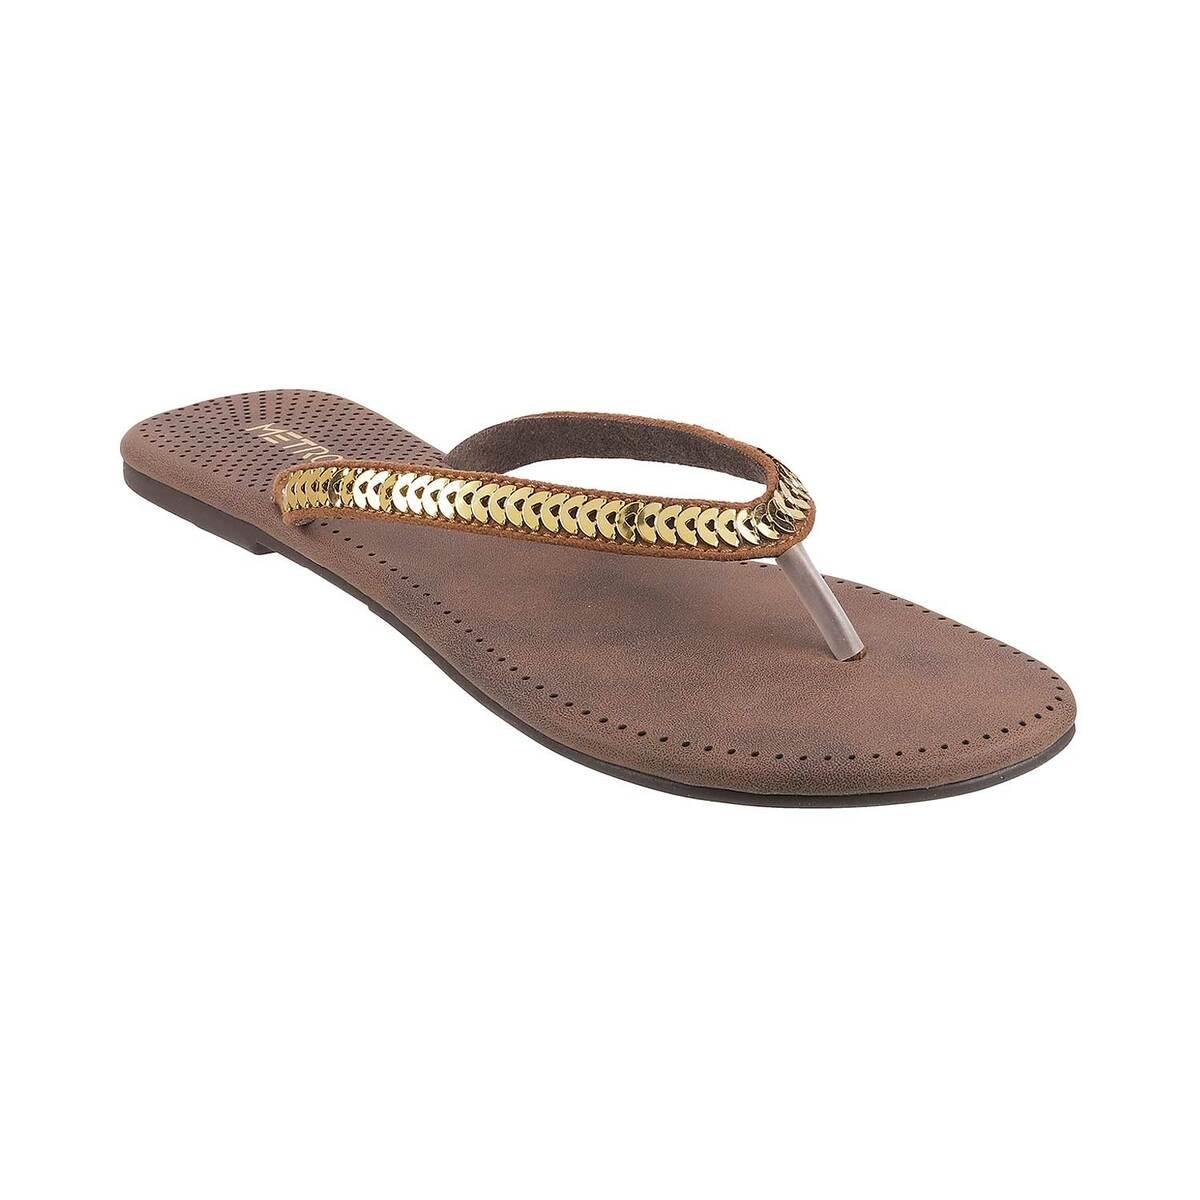 Buy Women Tan Casual Slippers Online | SKU: 32-1300-23-36-Metro Shoes